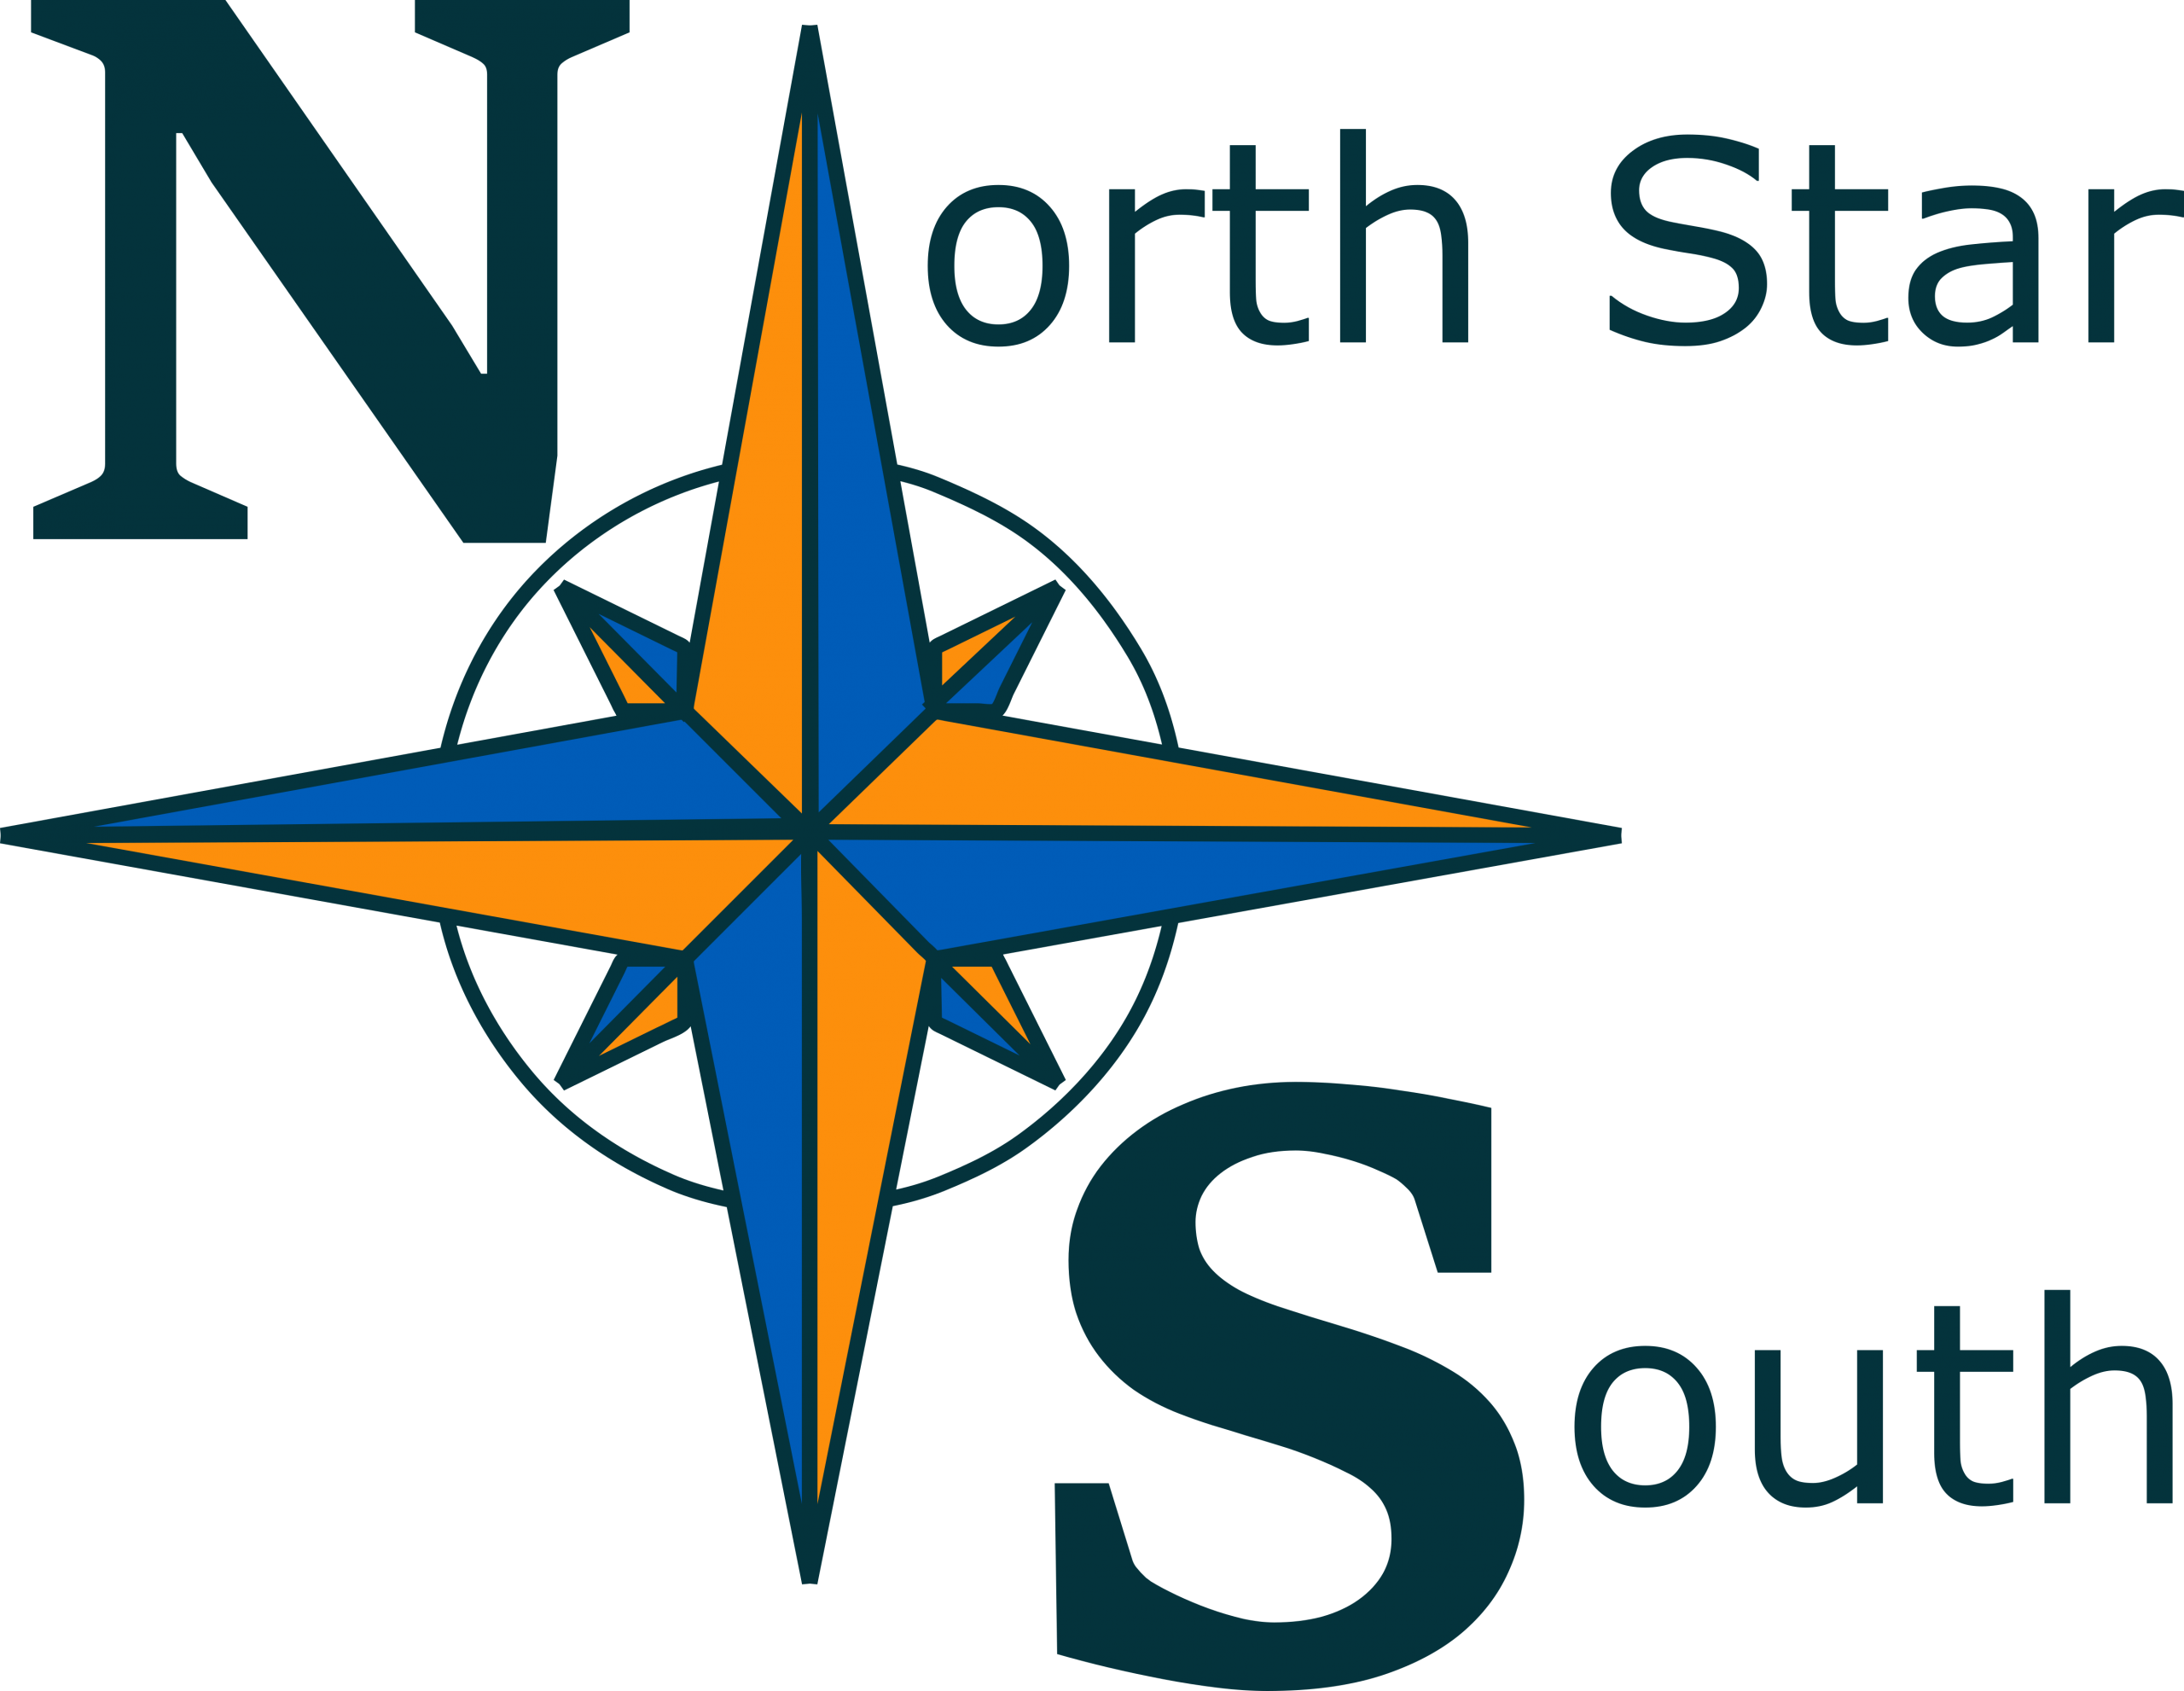 North Star South